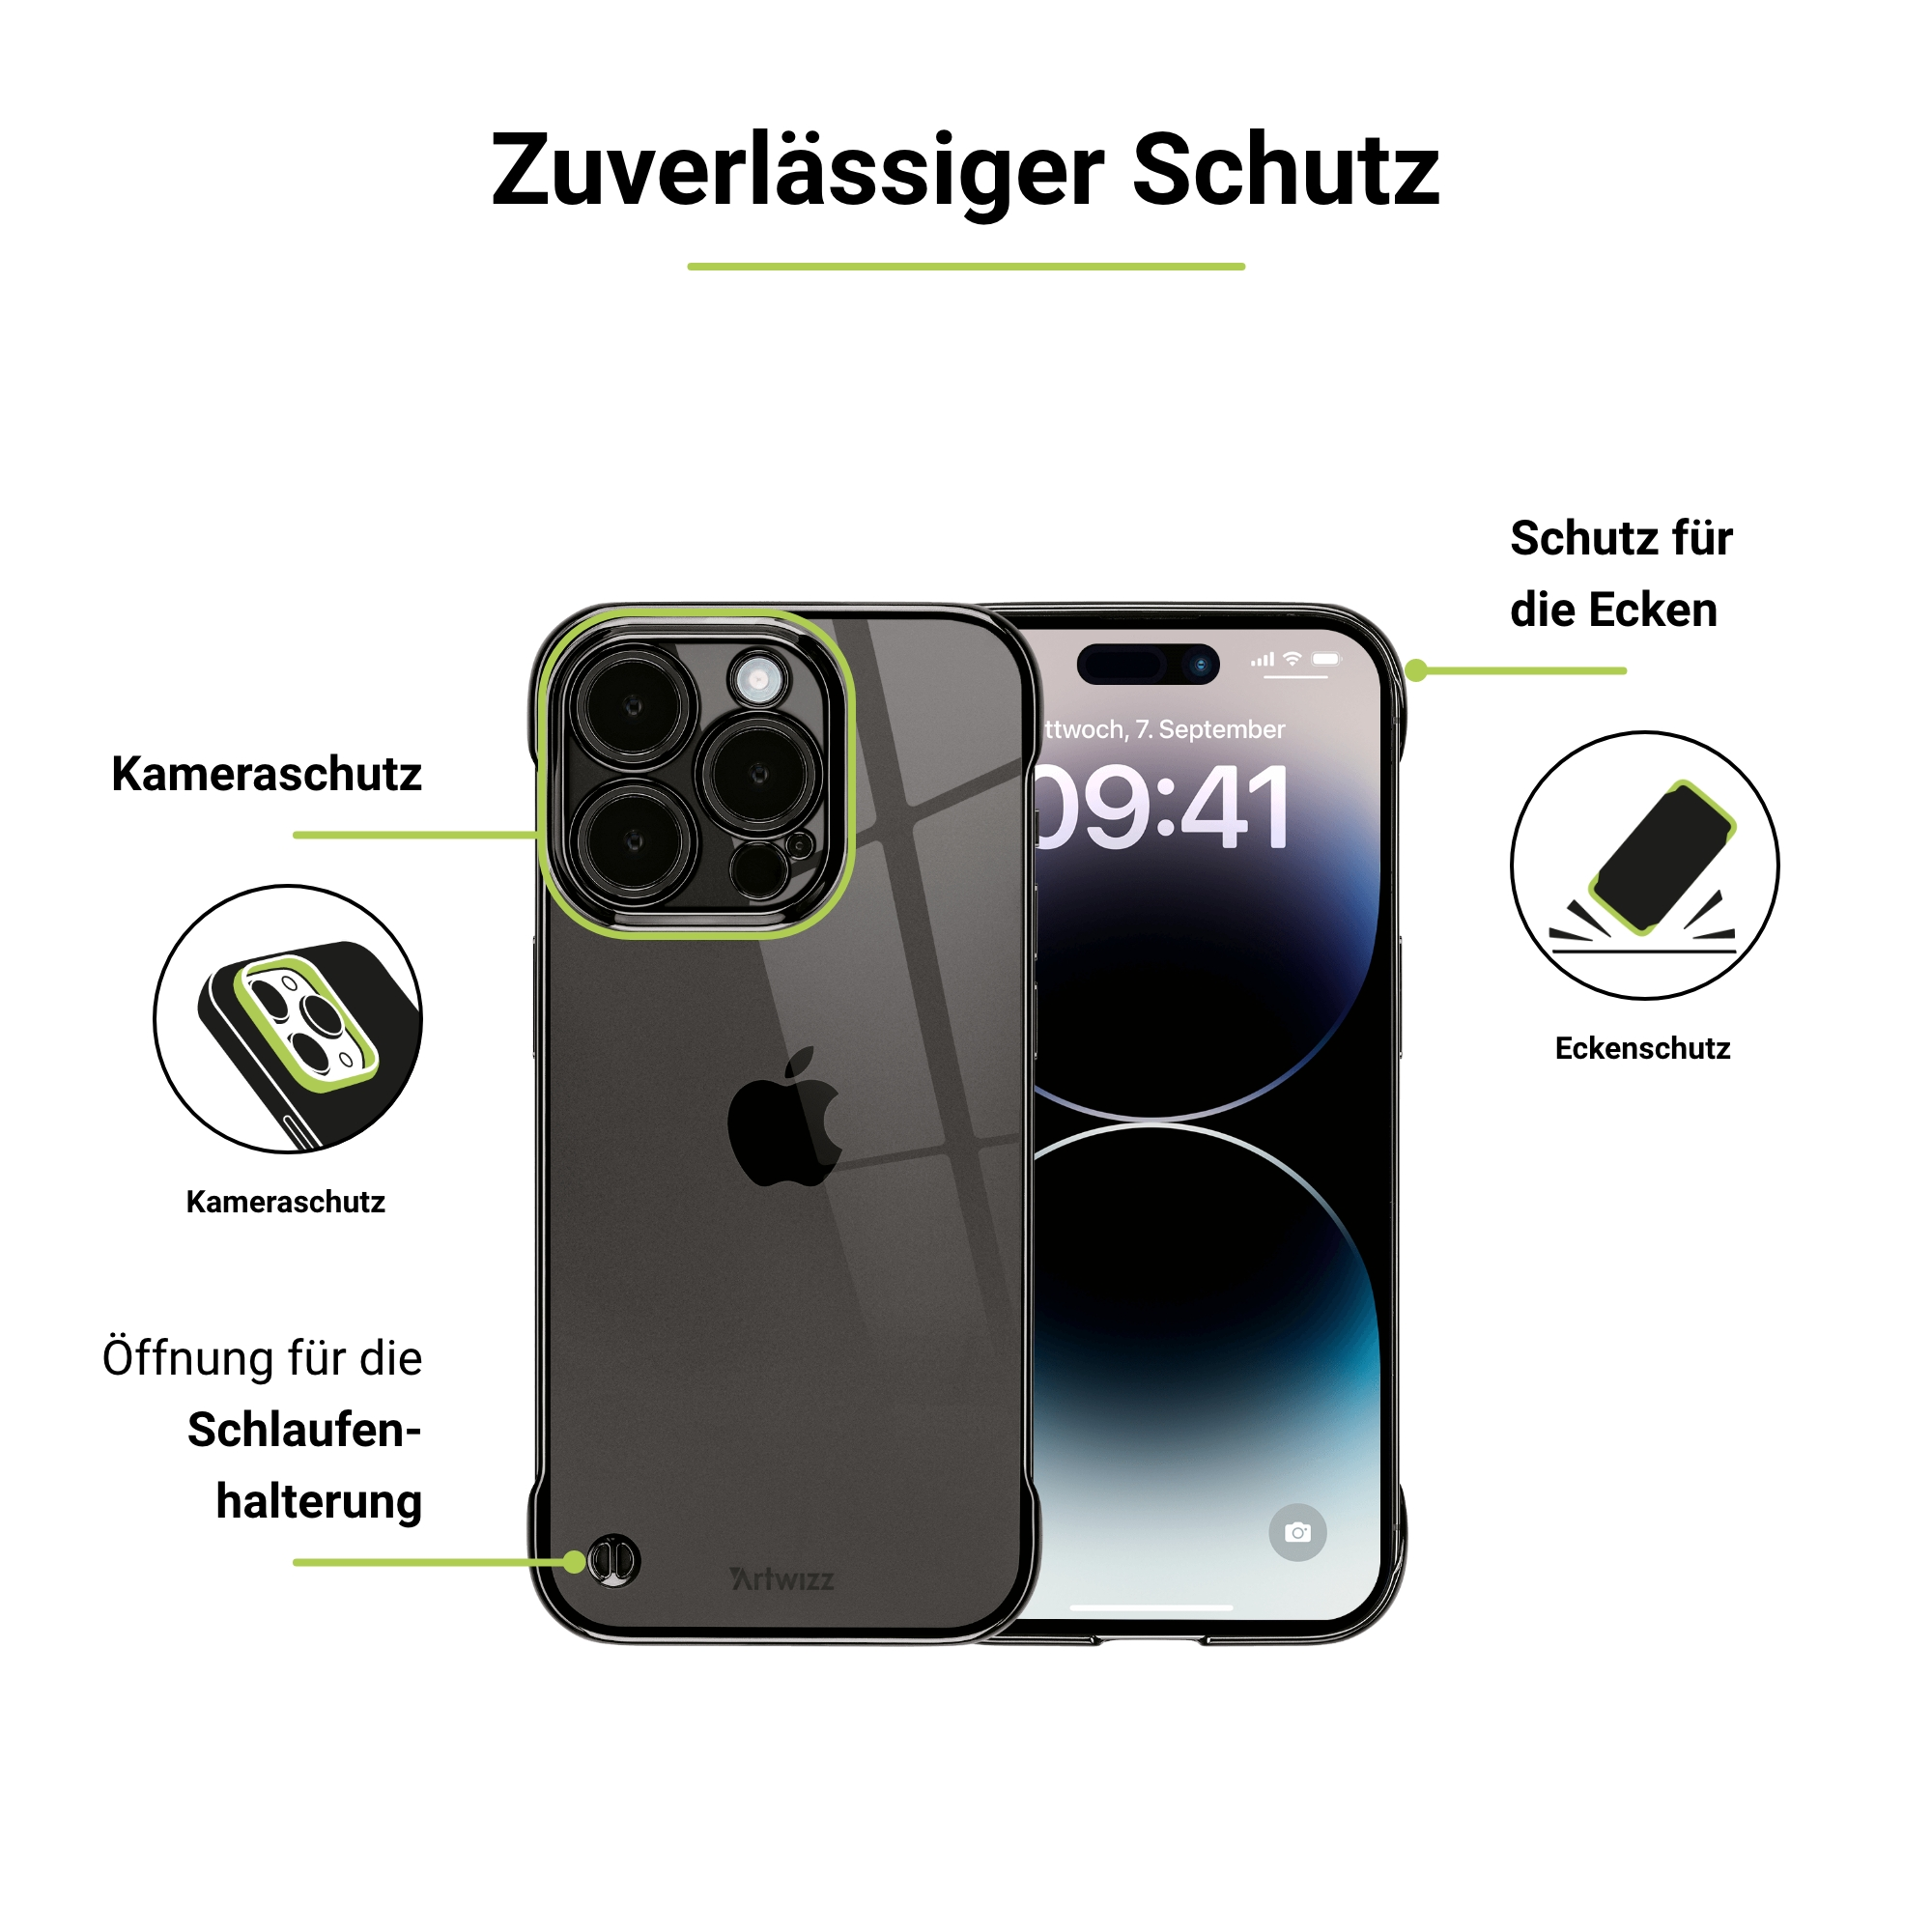 ARTWIZZ MazingClip, iPhone Schwarz Max, 14 Apple, Pro Backcover,